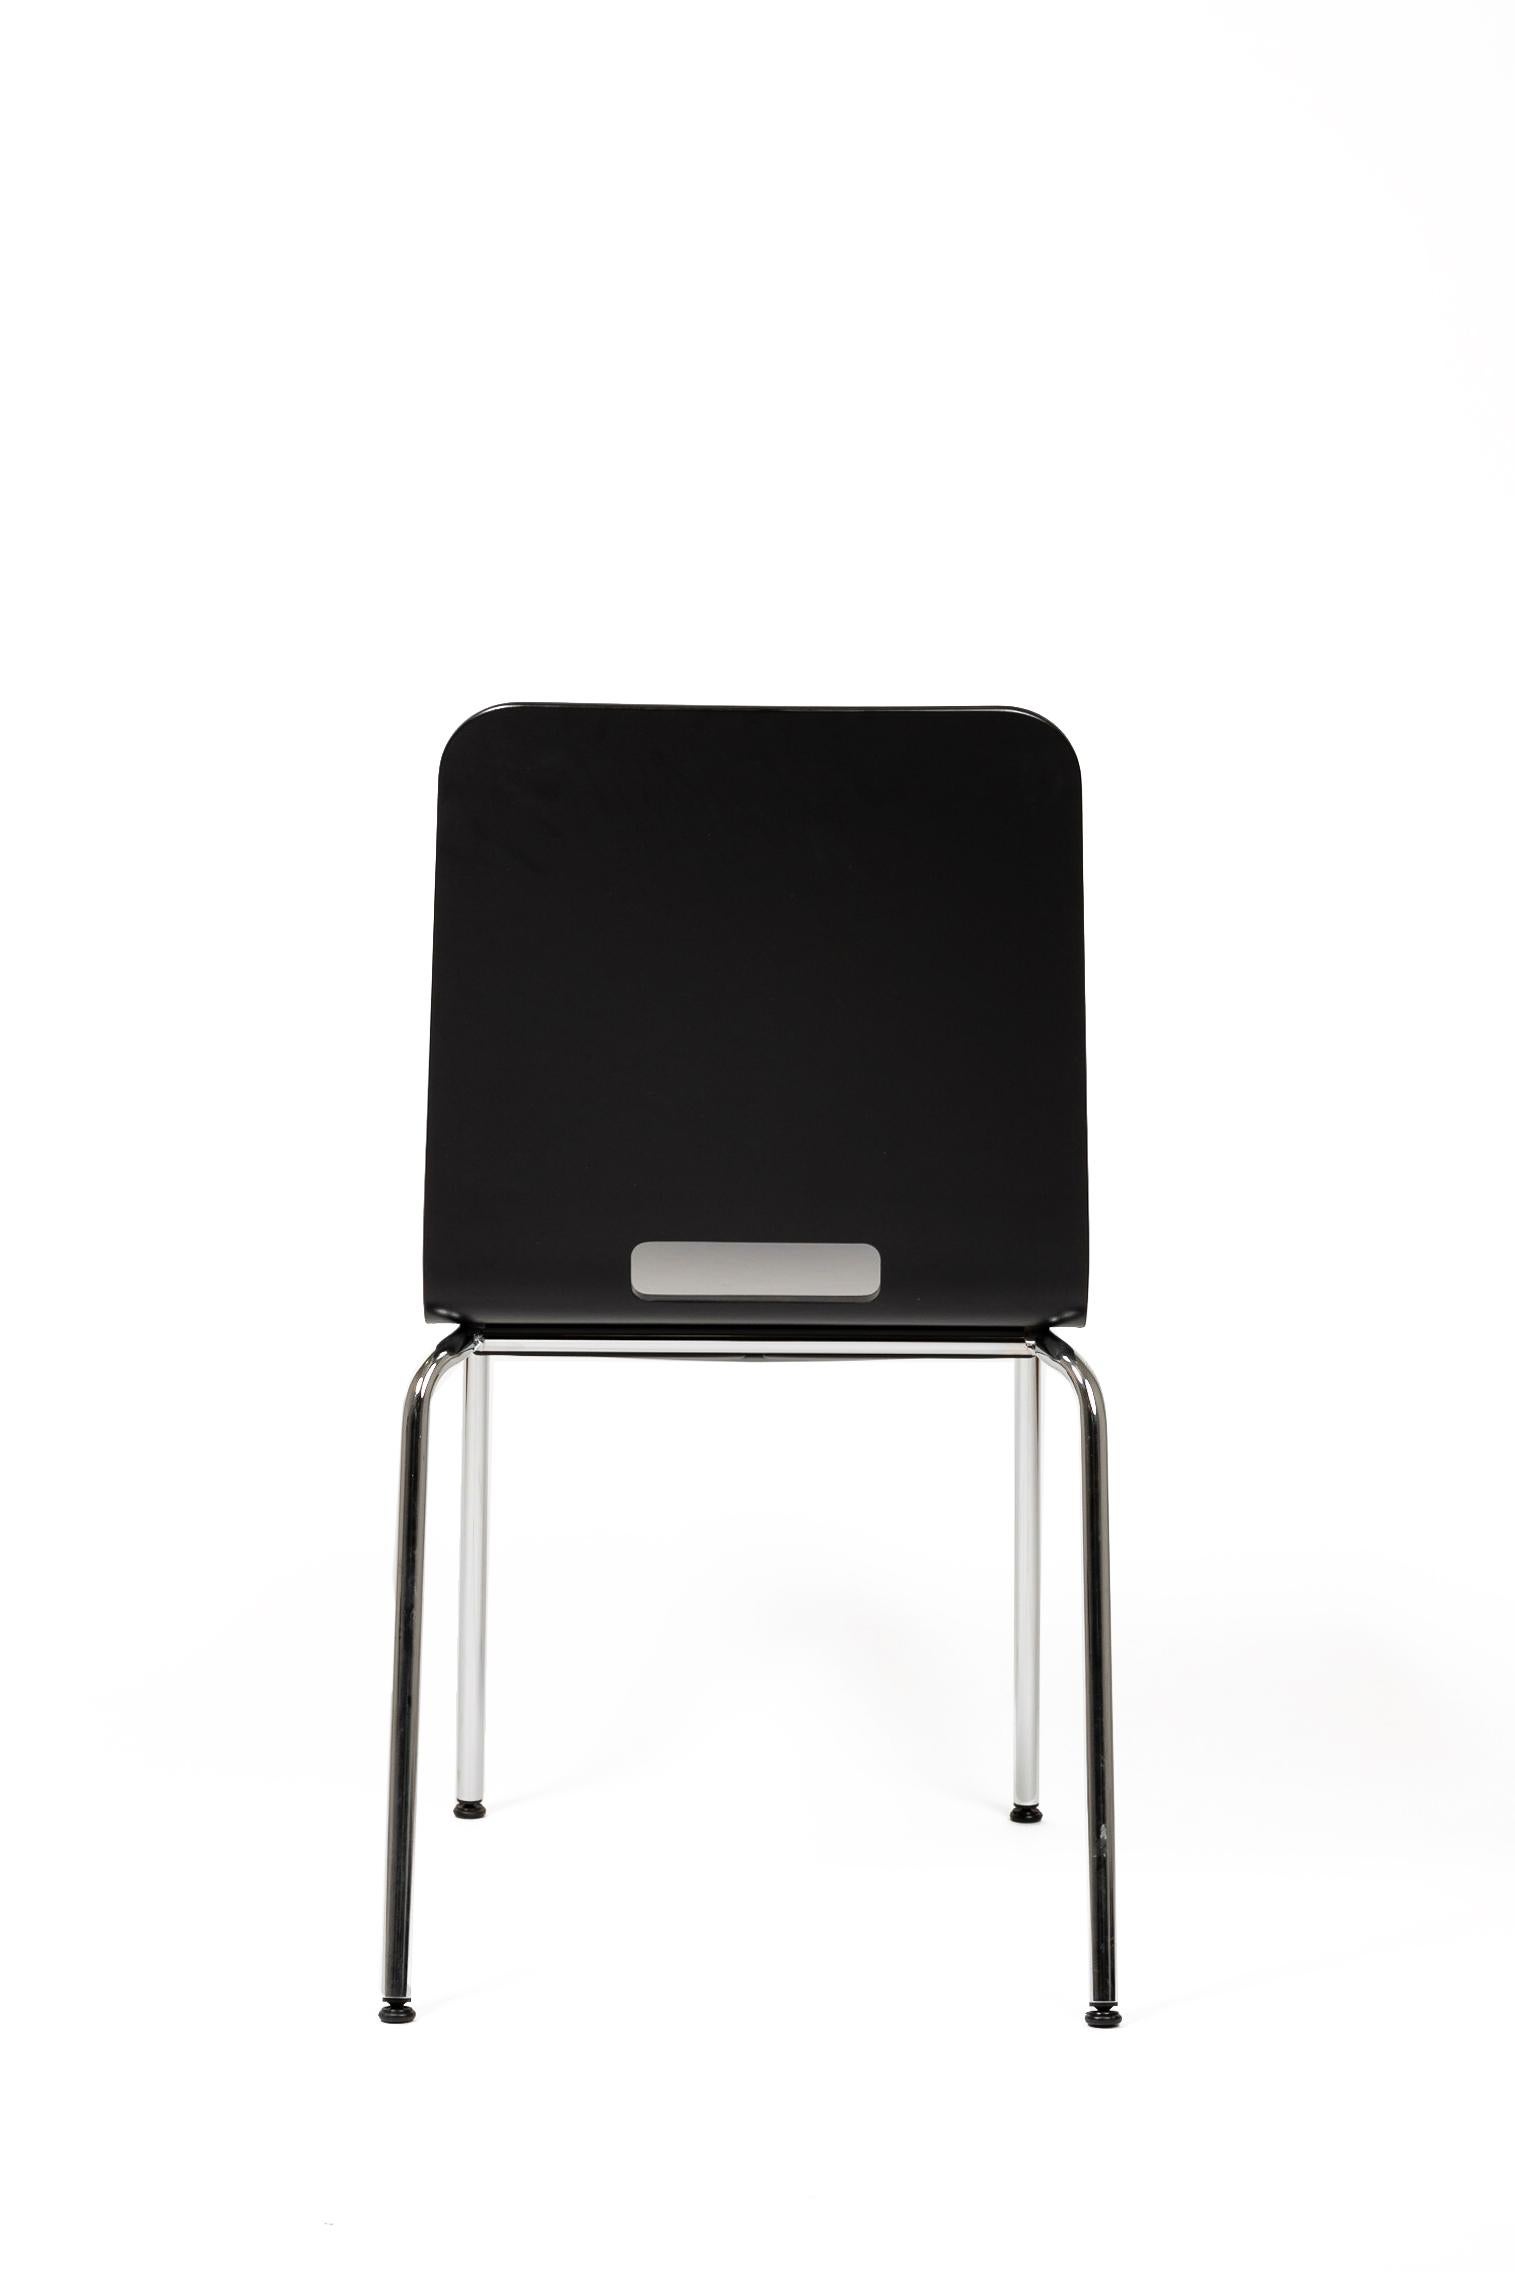 Steel 4-Set Dietiker Alta Modern Dining Chair, Designed by Greutmann Bolzern, in Stock